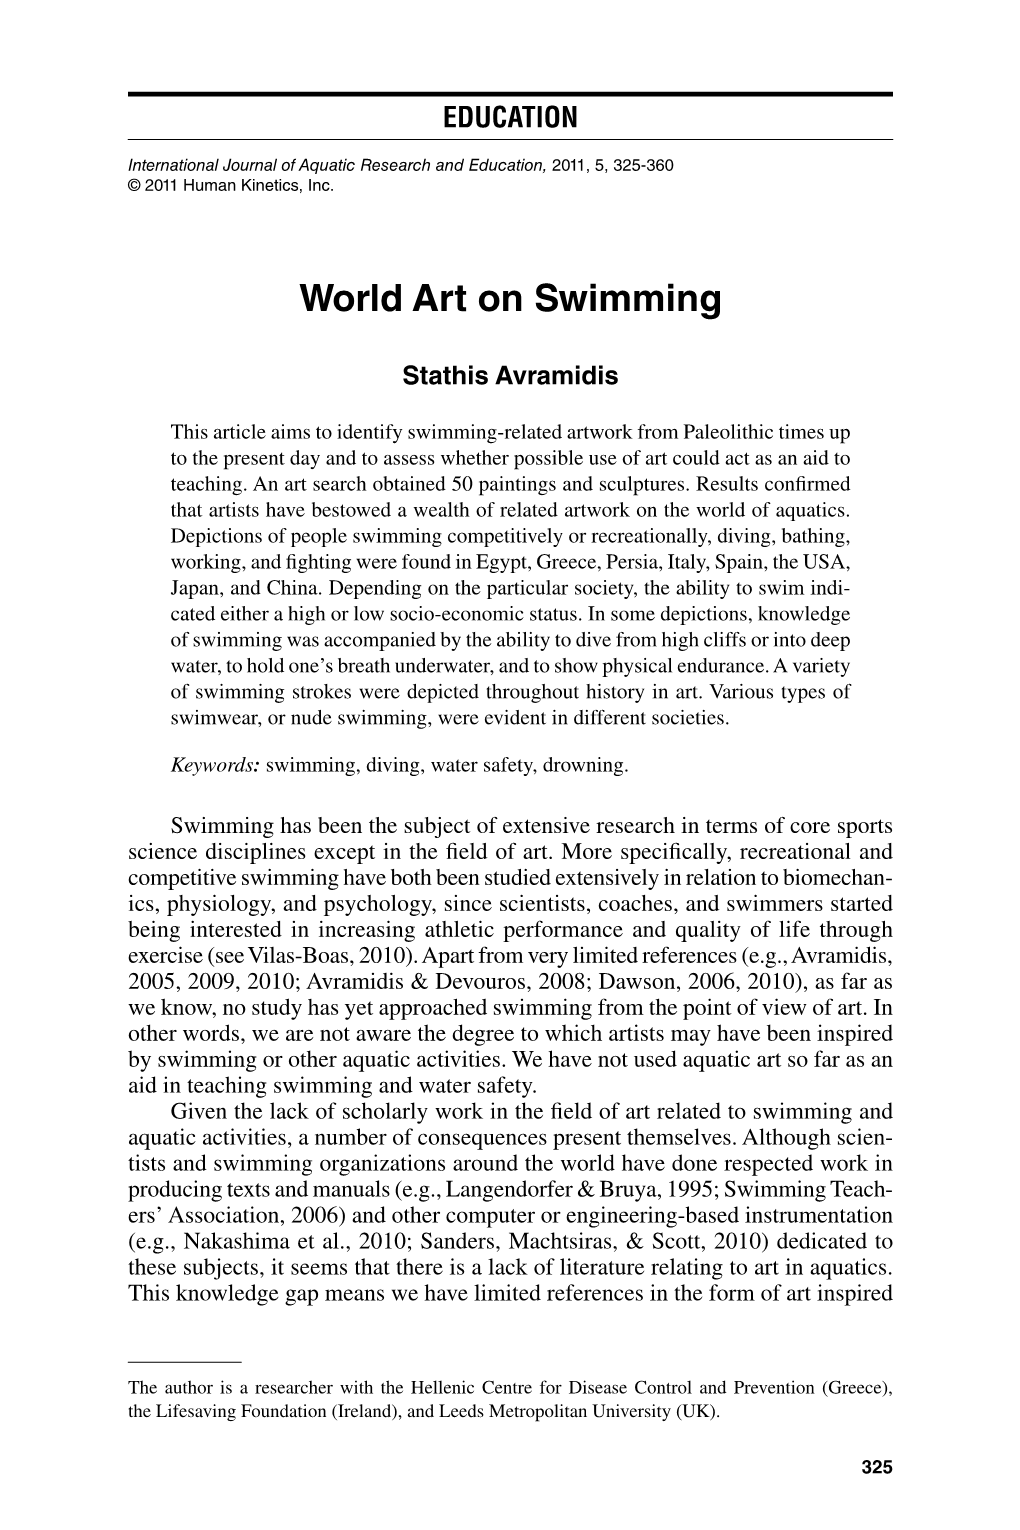 World Art on Swimming